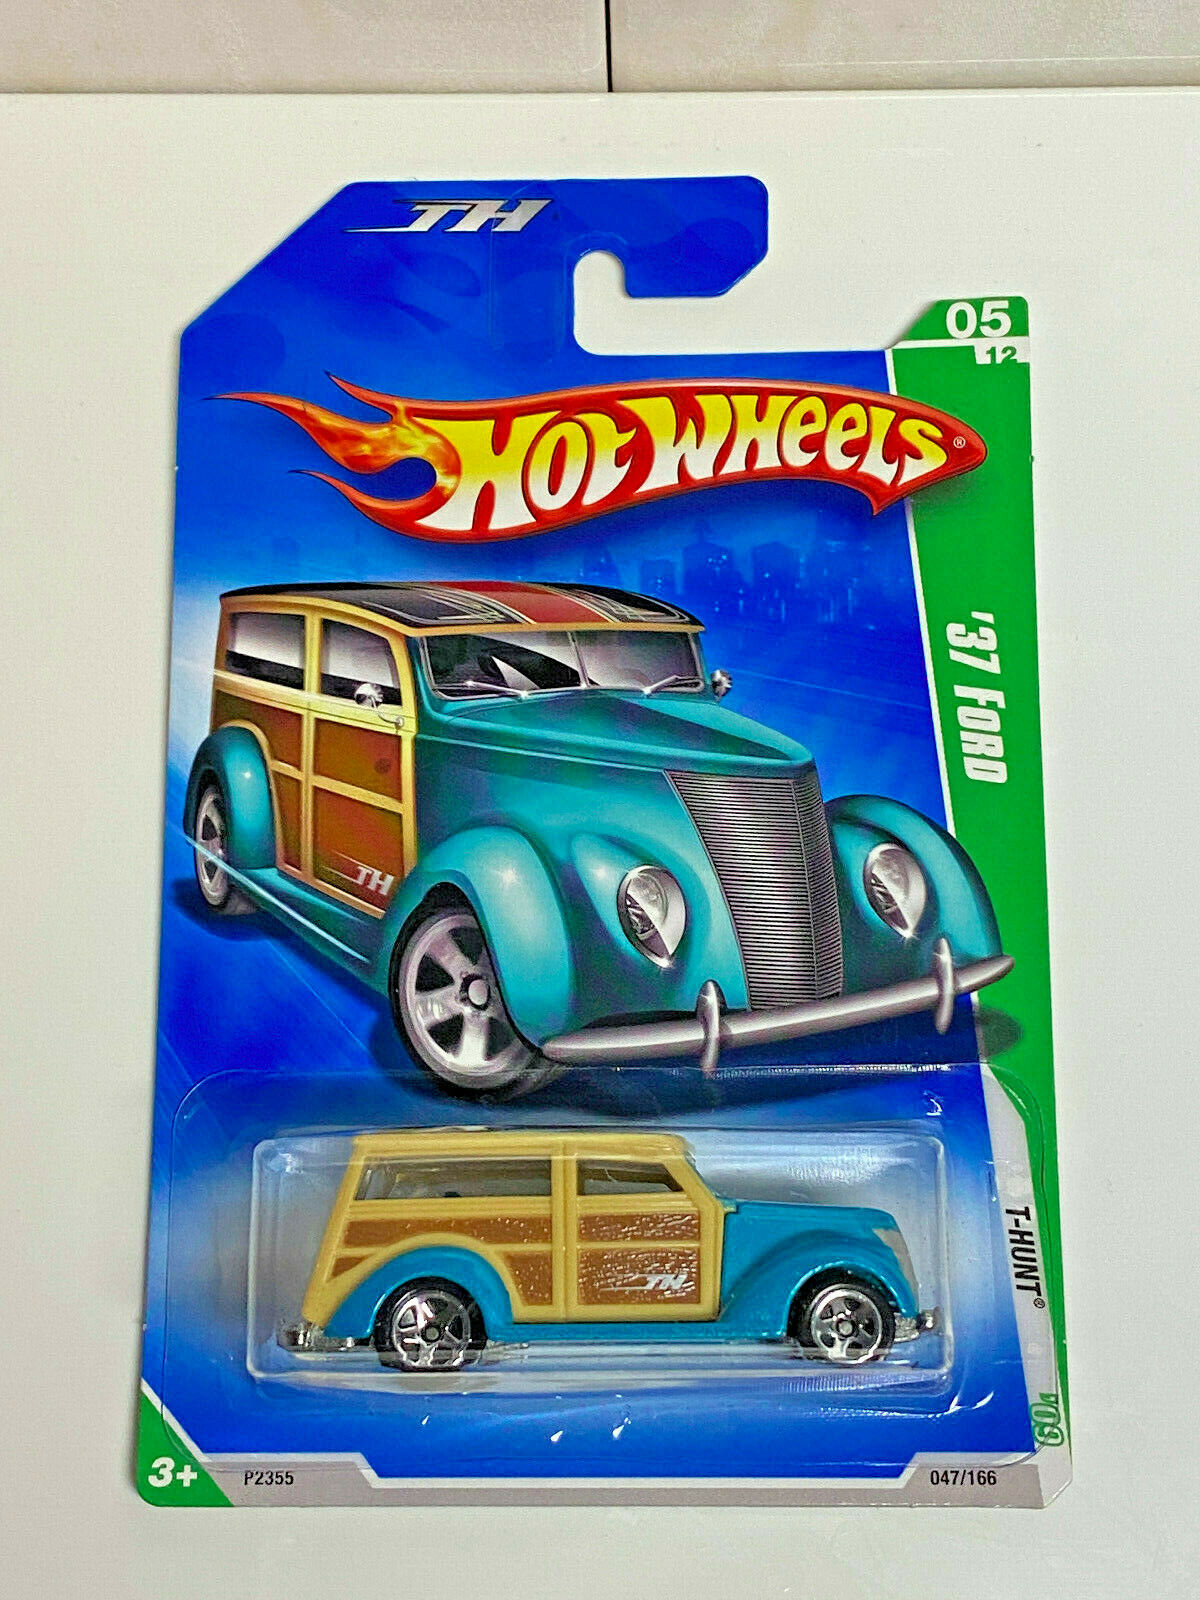 2009 Hot Wheels Treasure Hunts #05/12 '37 Ford Wagon NIP INTERNATIONAL CARD